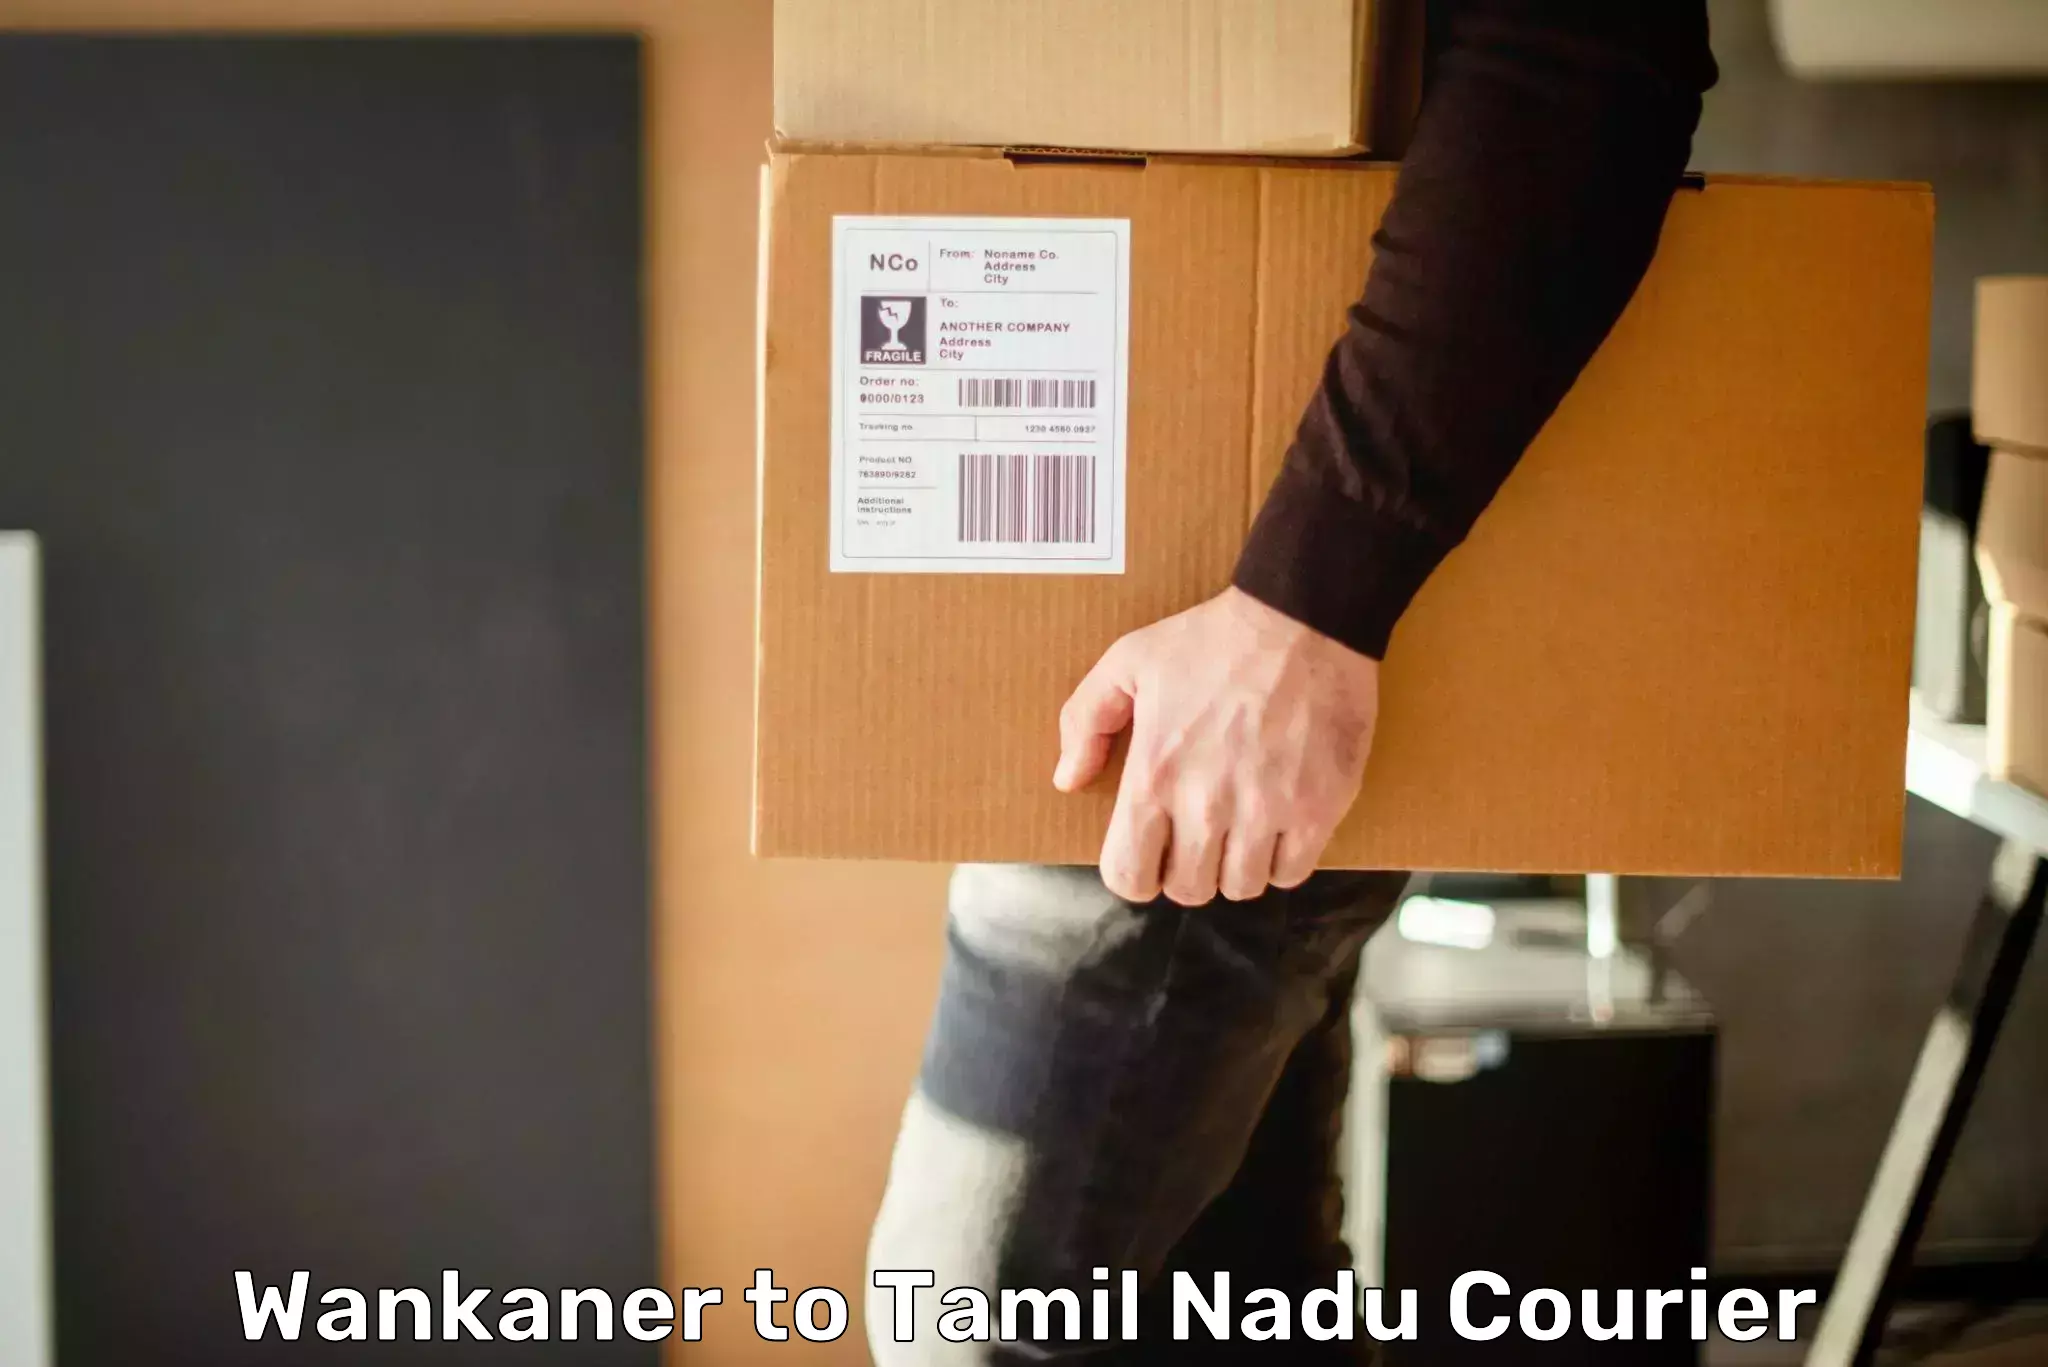 Professional courier handling Wankaner to Cuddalore